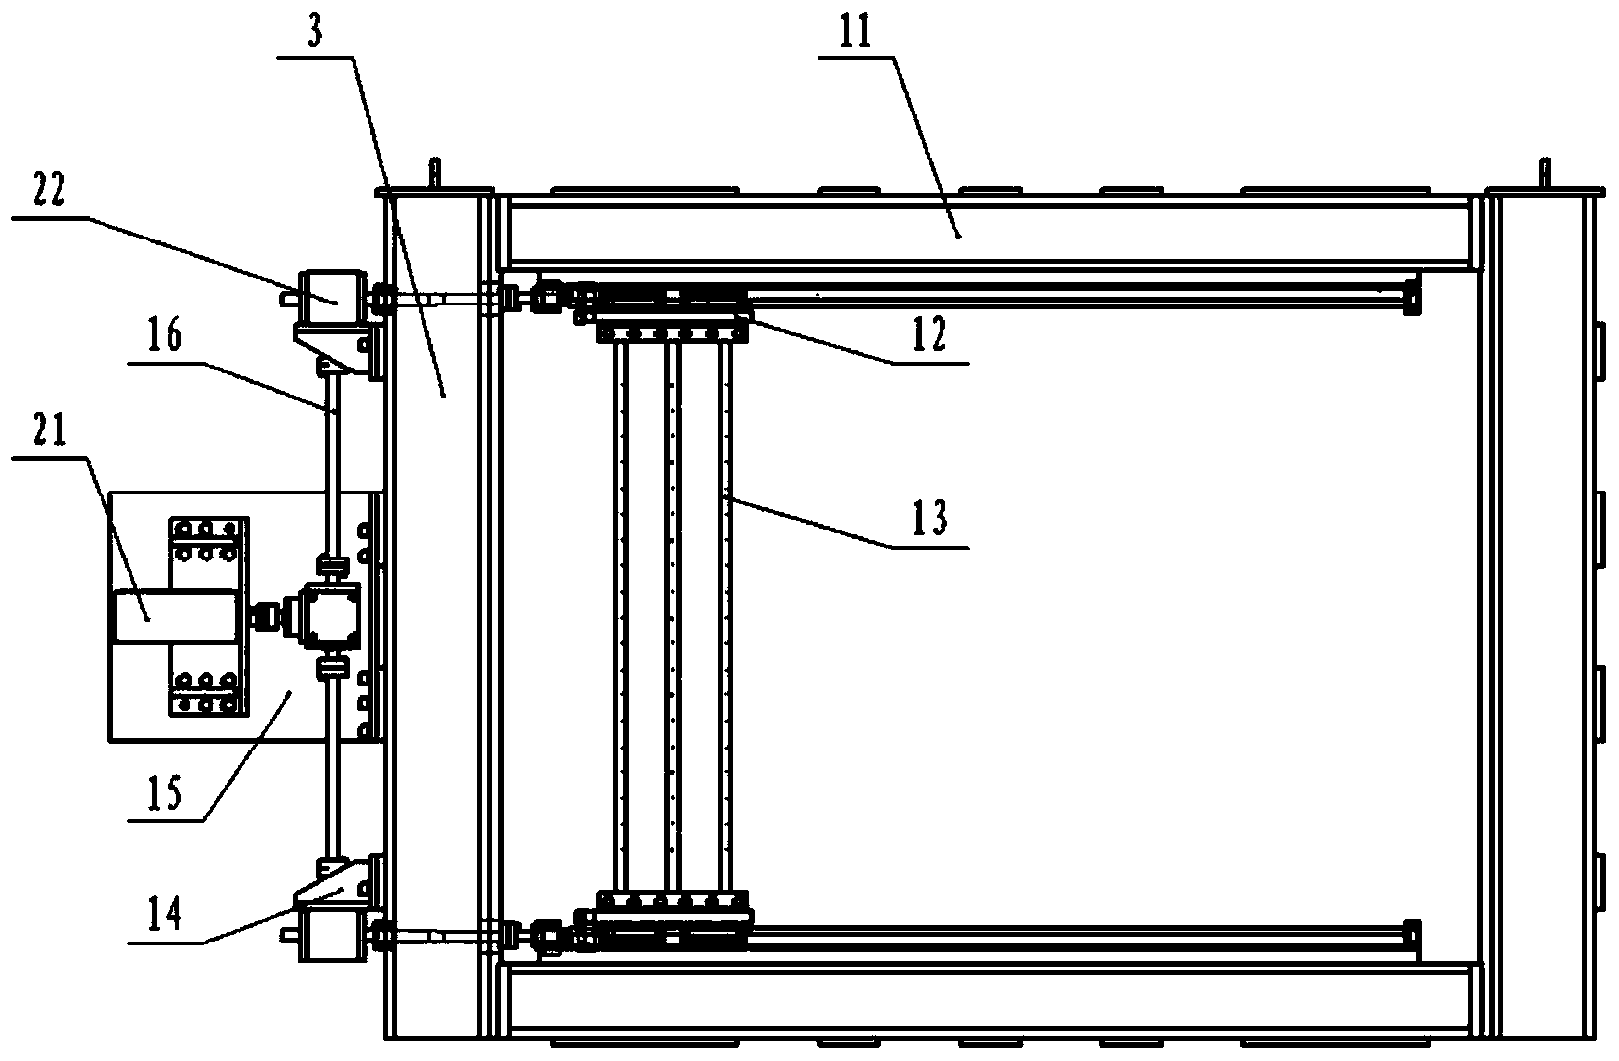 Flow field calibration apparatus